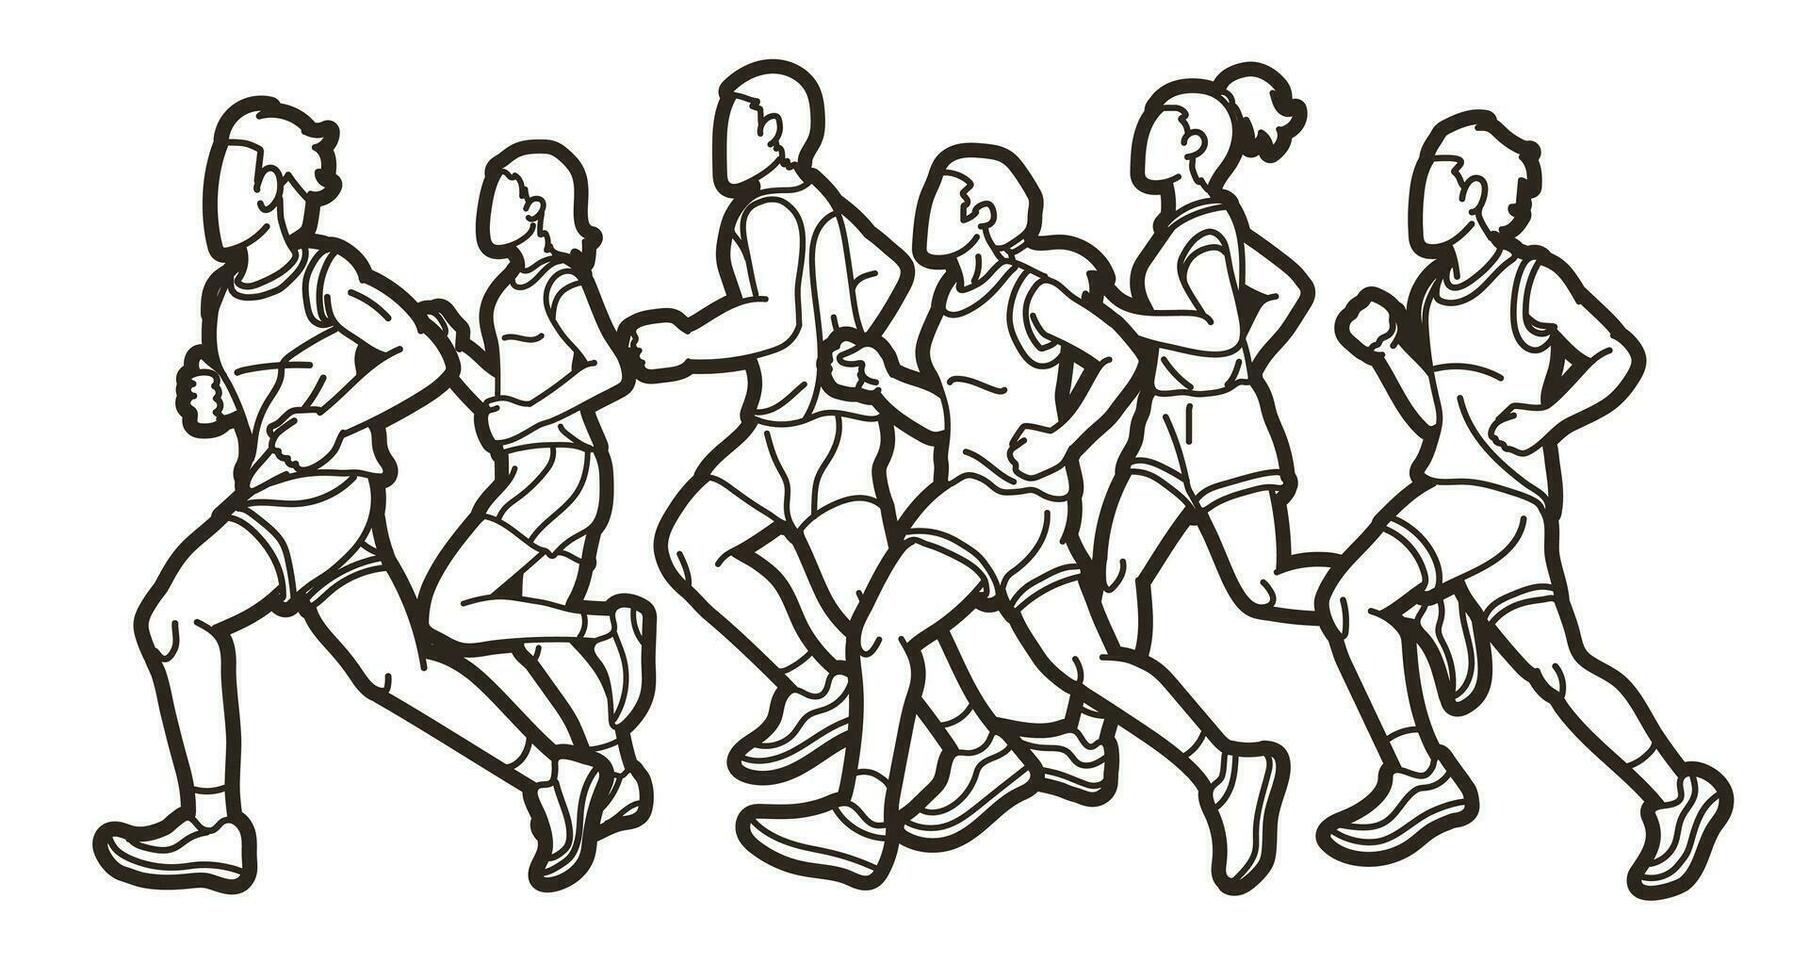 groep van mensen rennen samen tekenfilm sport grafisch vector